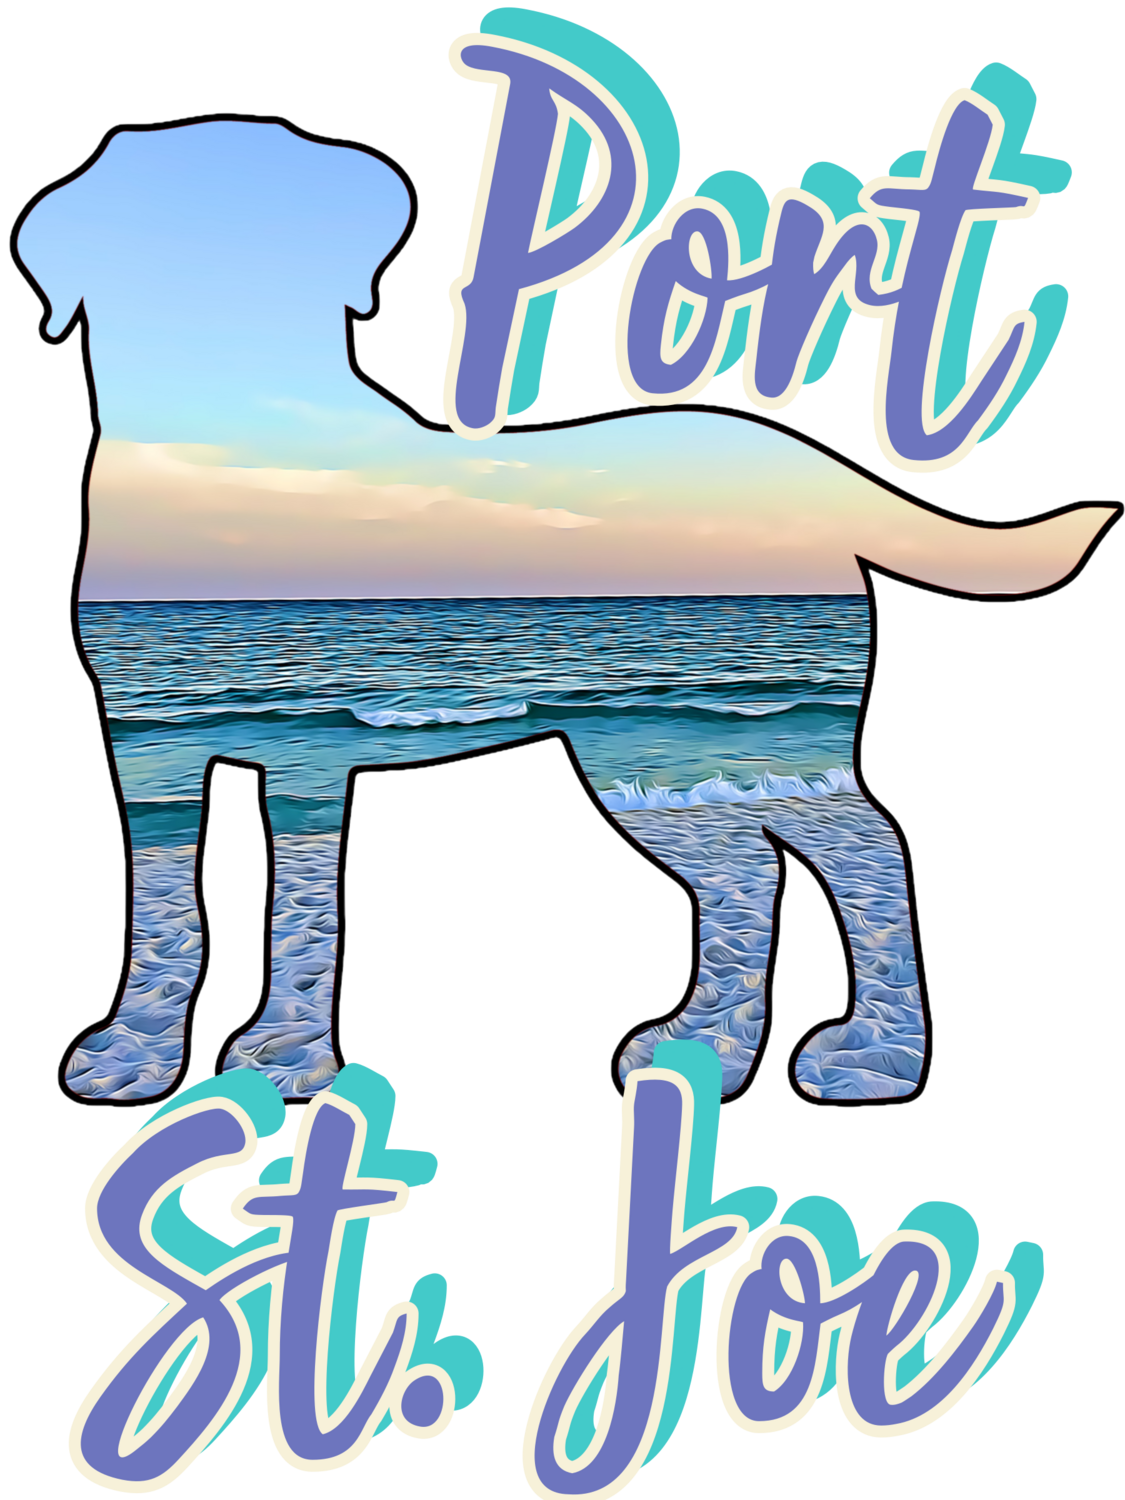 Port St Joe Unisex t-shirt